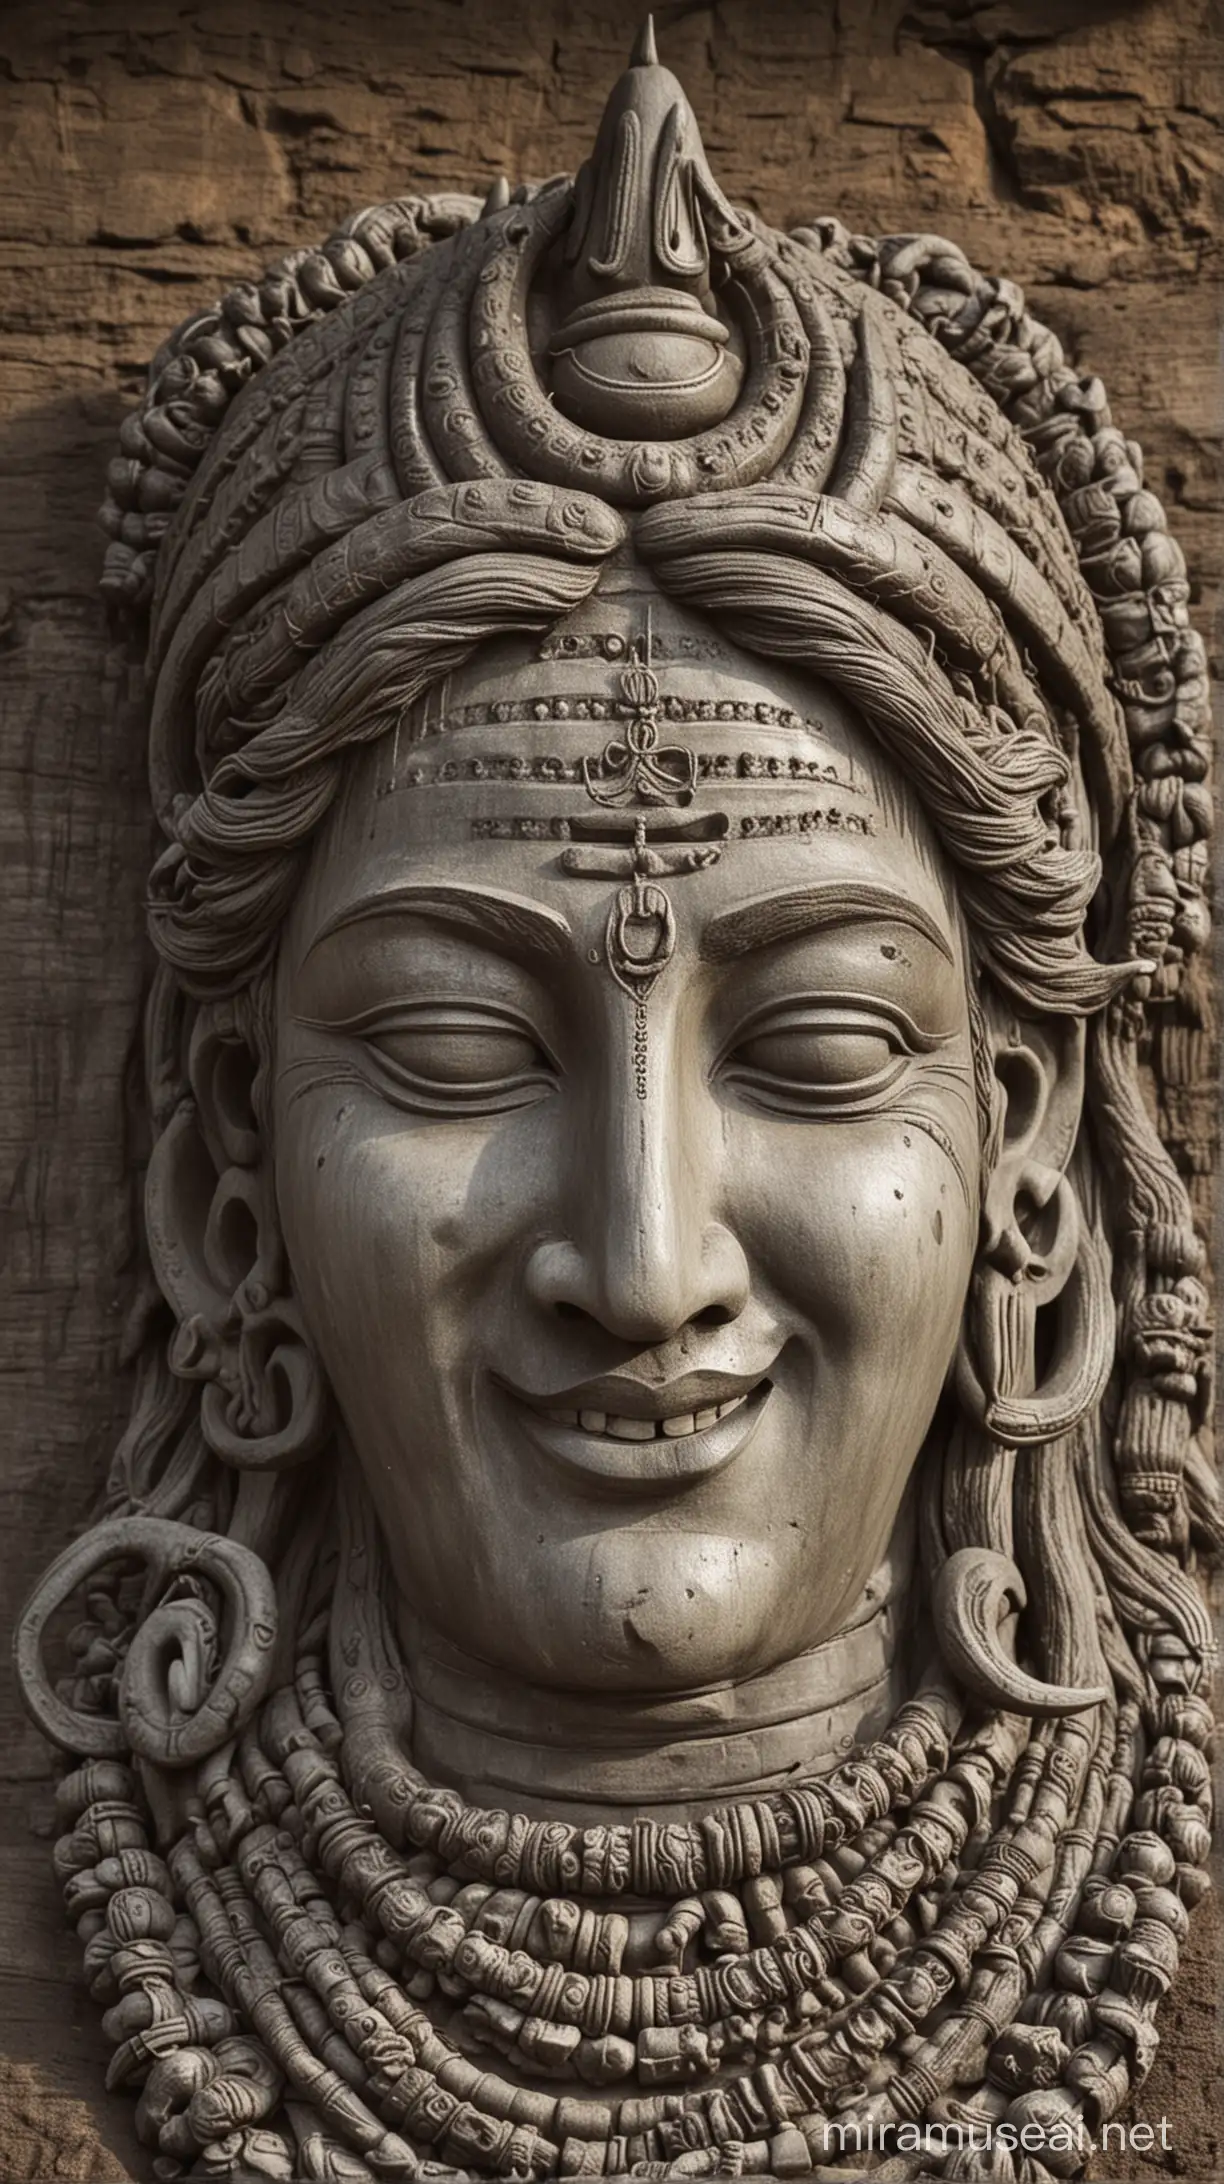 Smiling Lord Shiva Face Divine Serenity and Joyful Presence